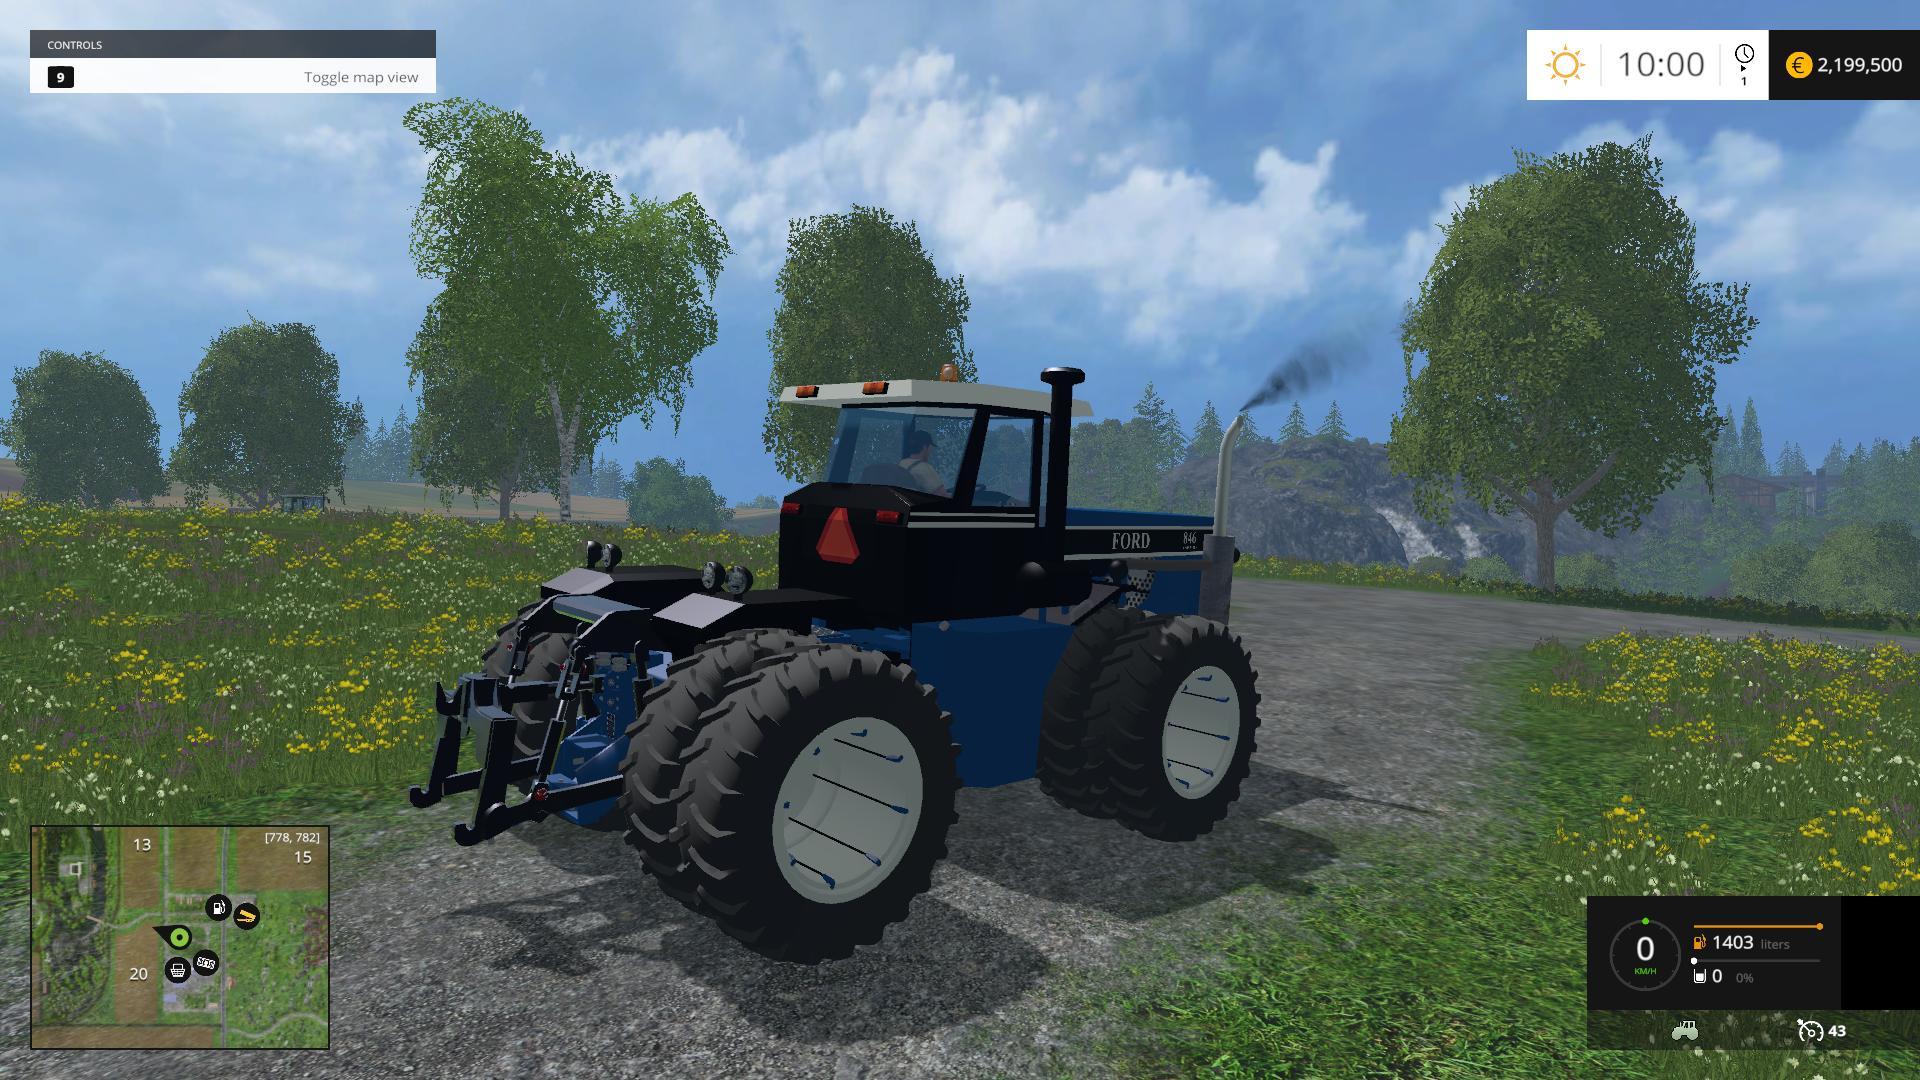 FORD VERSATILE 846 TRACTOR V1 - Farming simulator 2015 / 15 LS mod